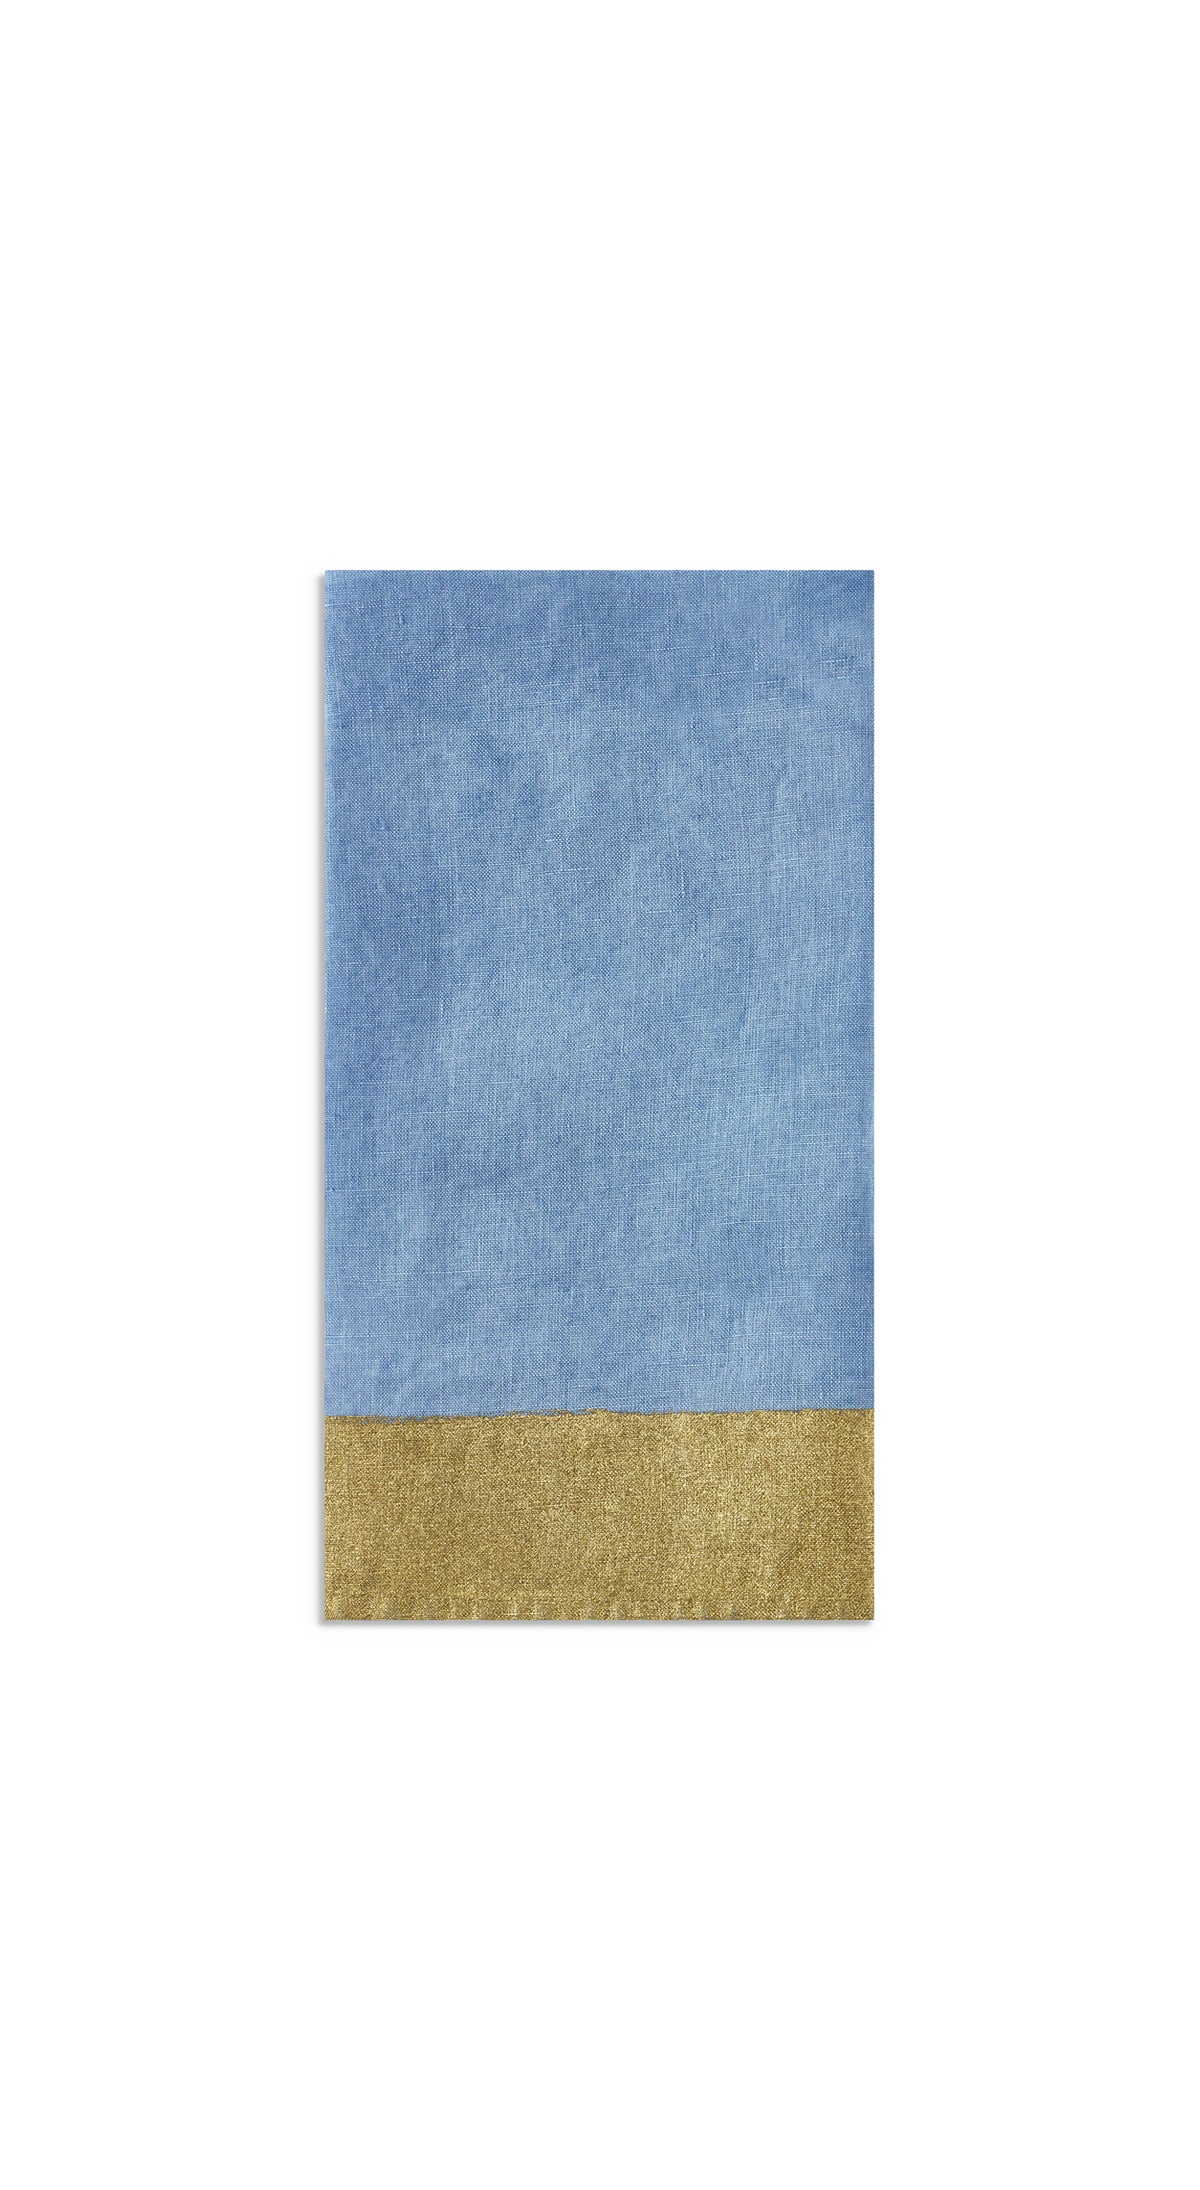 Gold Edge Linen Napkin in Pale Blue, 50x50cm